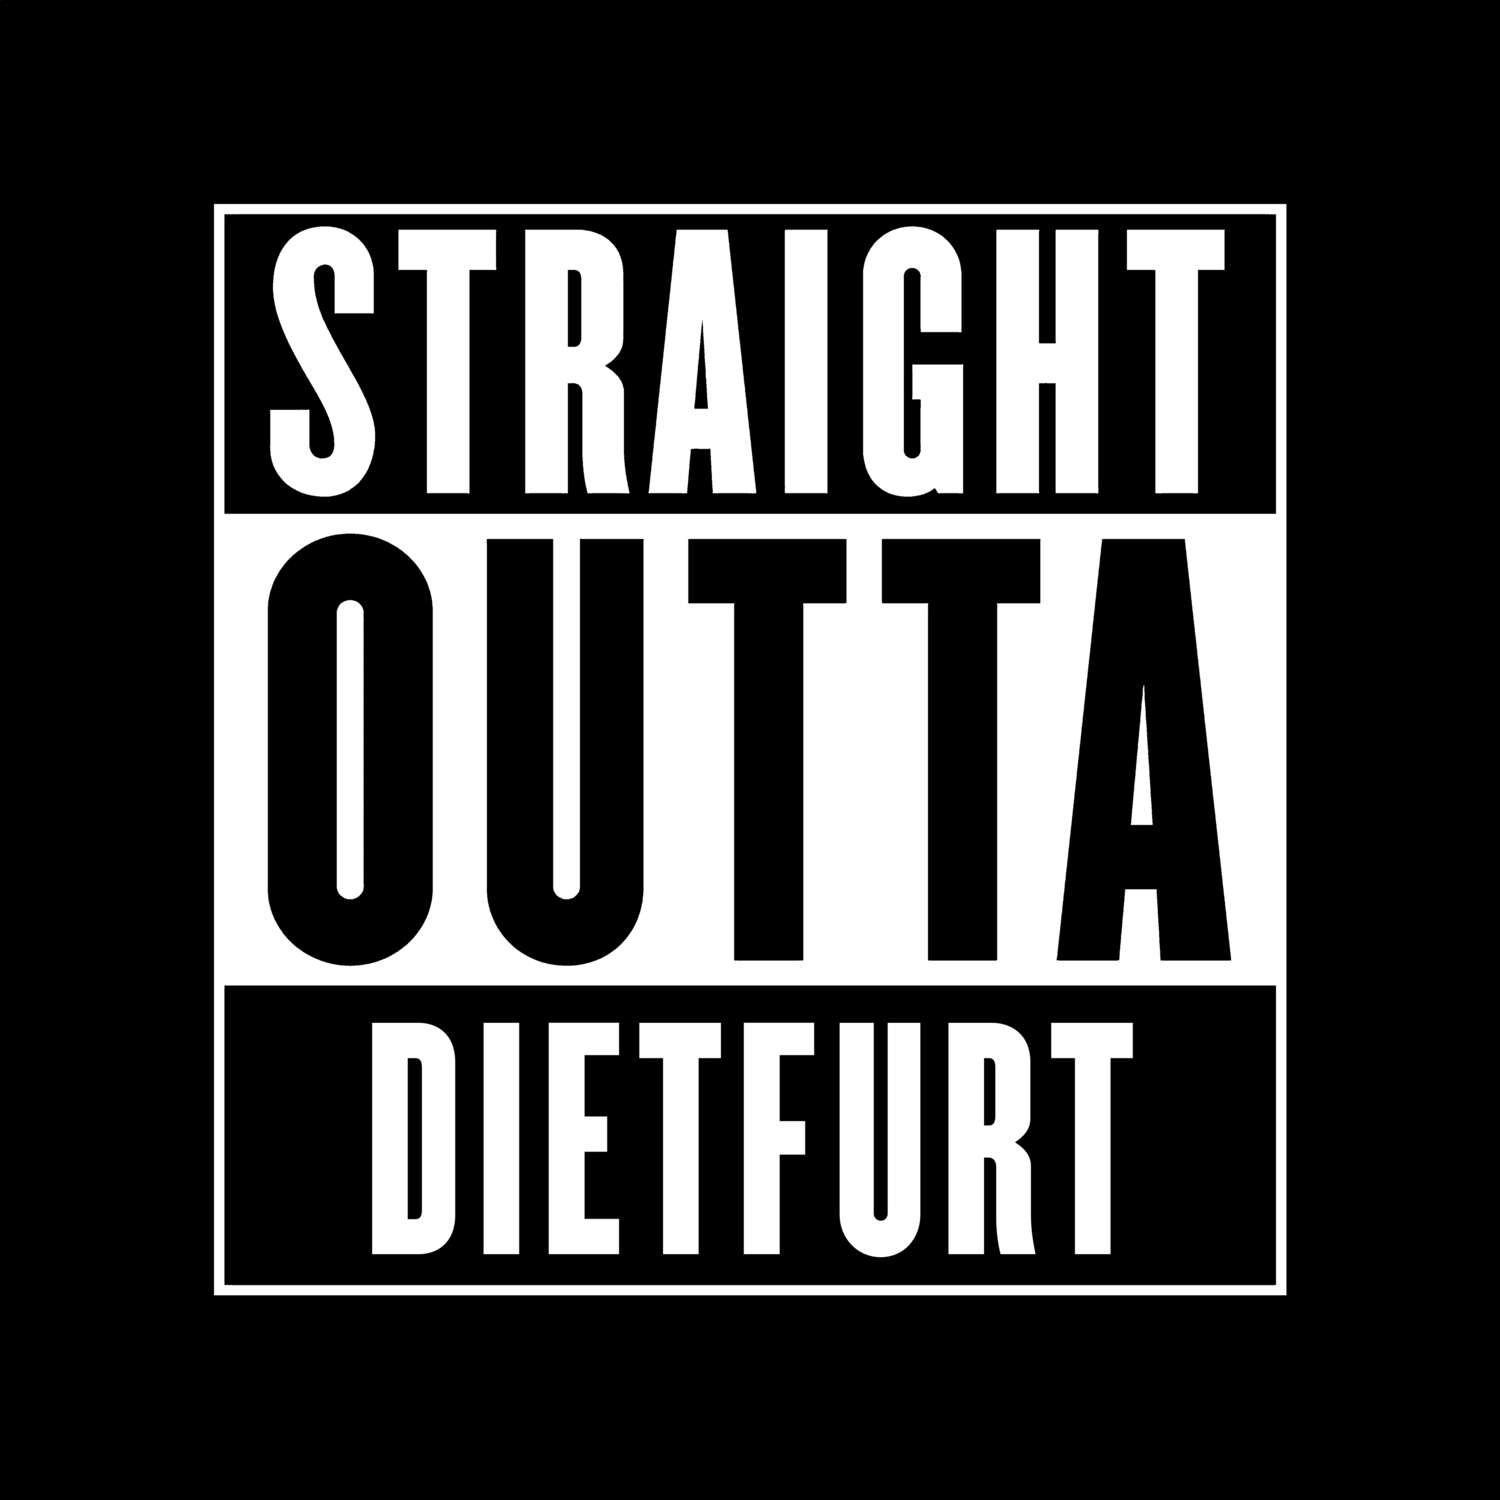 Dietfurt T-Shirt »Straight Outta«